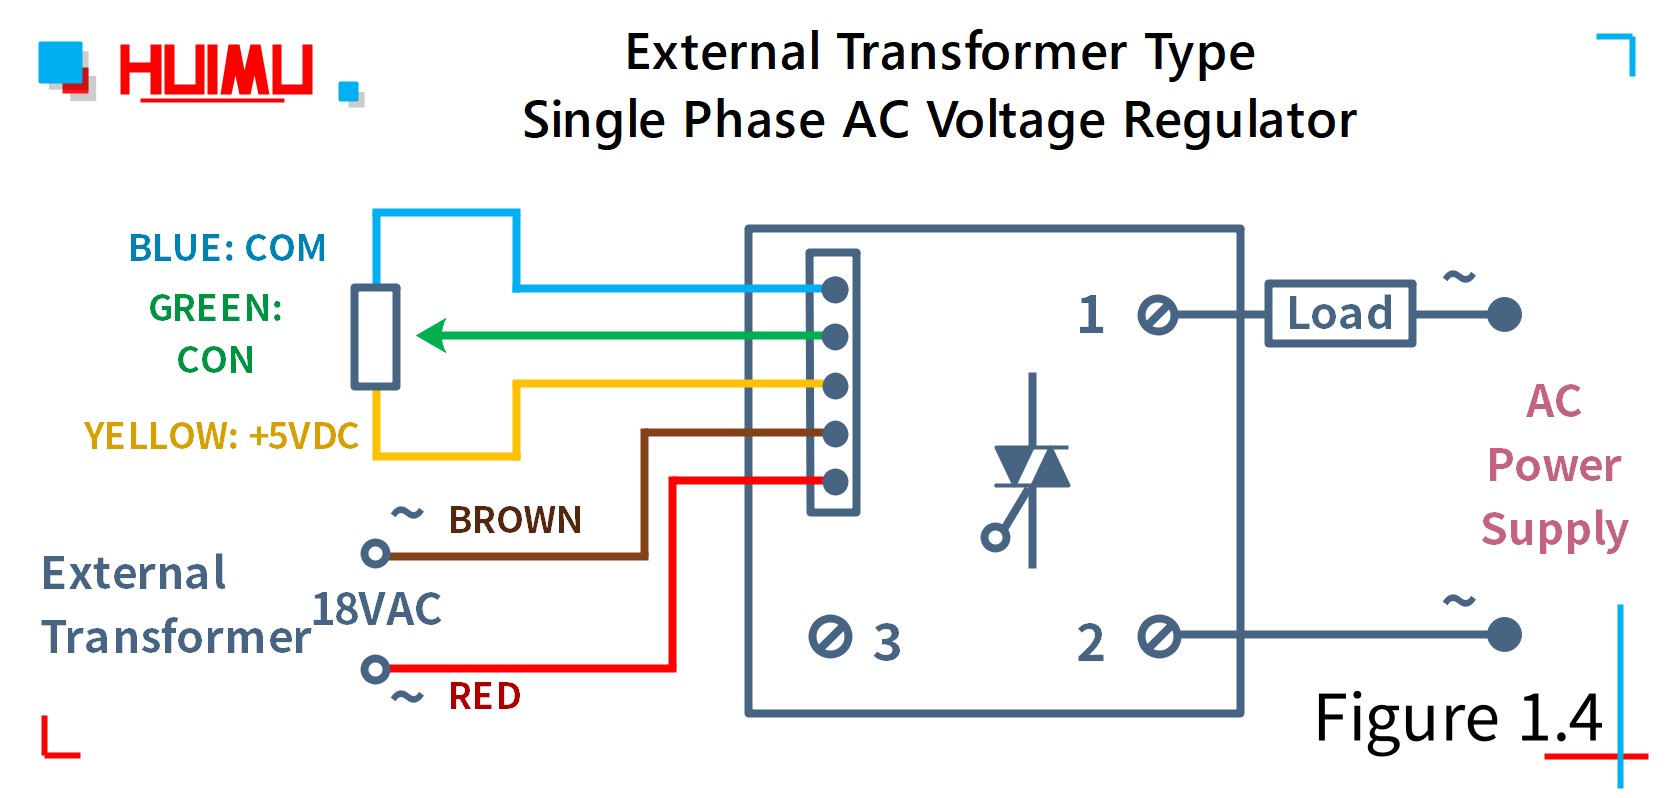 How to wire MGR mager MGR-EUV25A05E external transformer type single phase AC voltage regulator? More detail via www.@huimultd.com